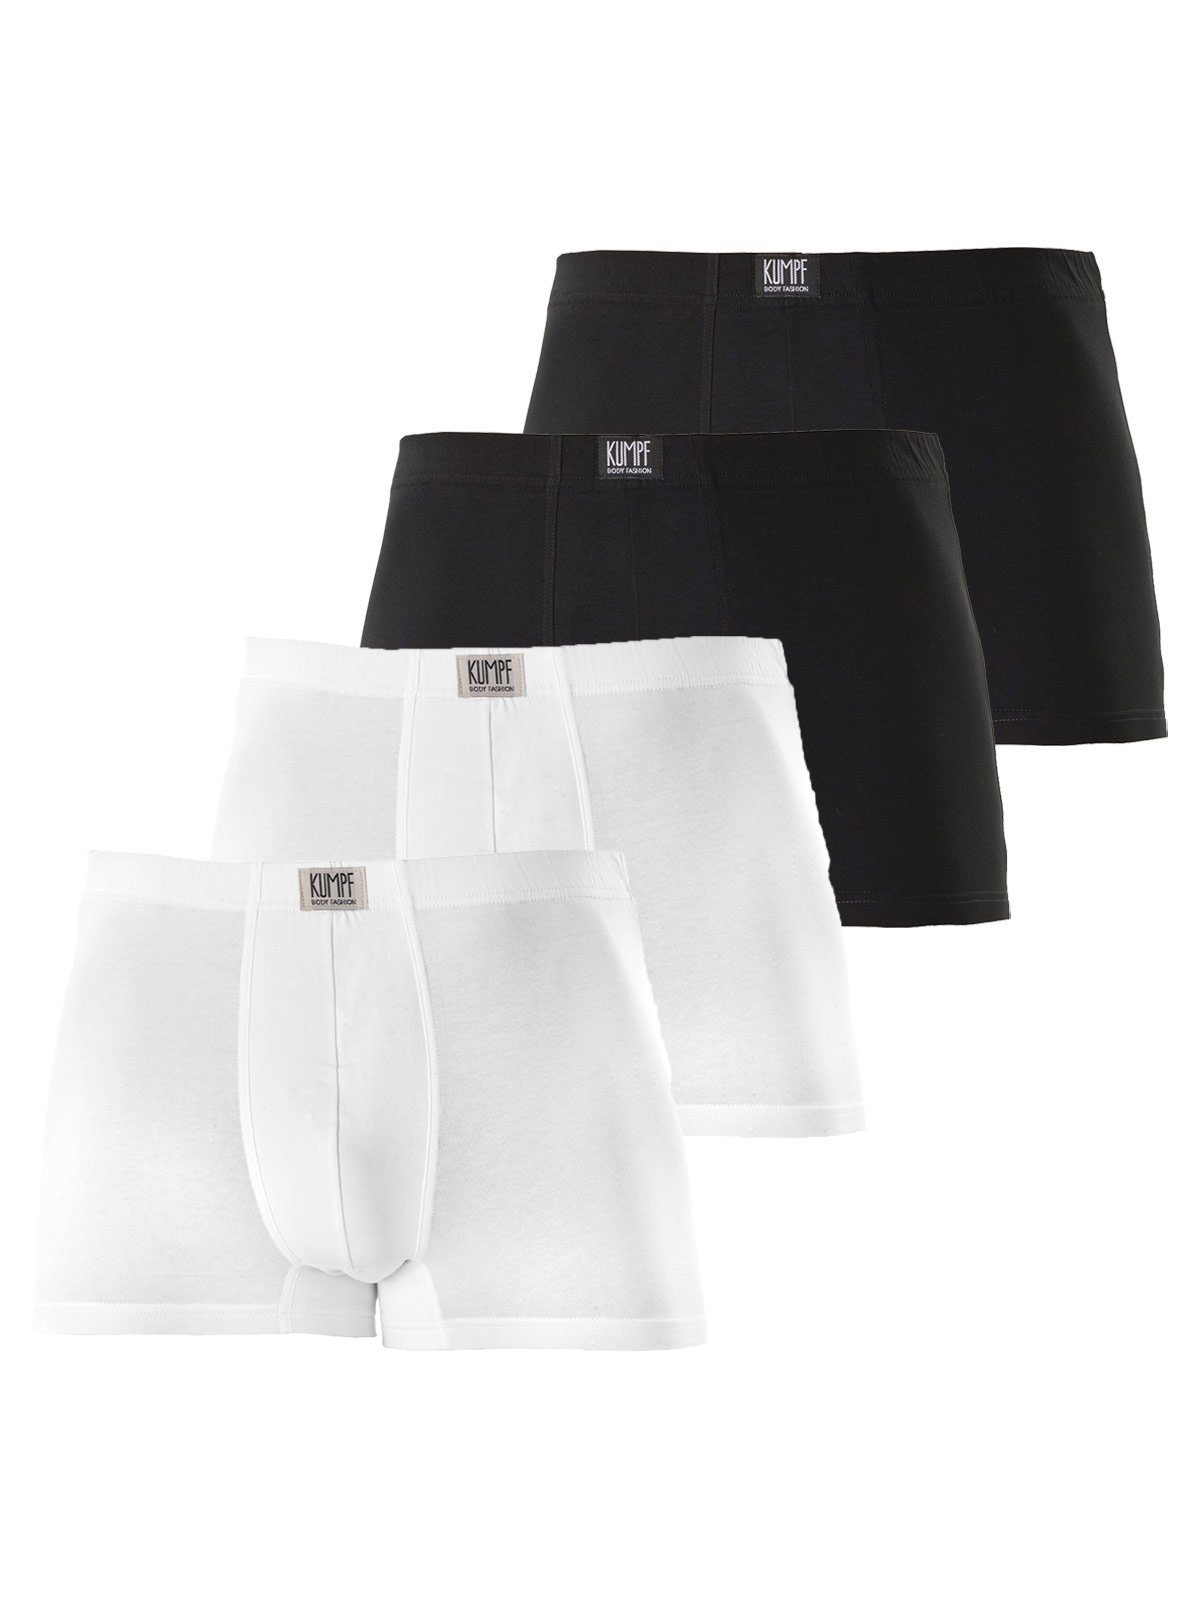 KUMPF Retro Pants 4er Sparpack Herren Pants Bio Cotton (Spar-Set, 4-St) hohe Markenqualität schwarz weiss